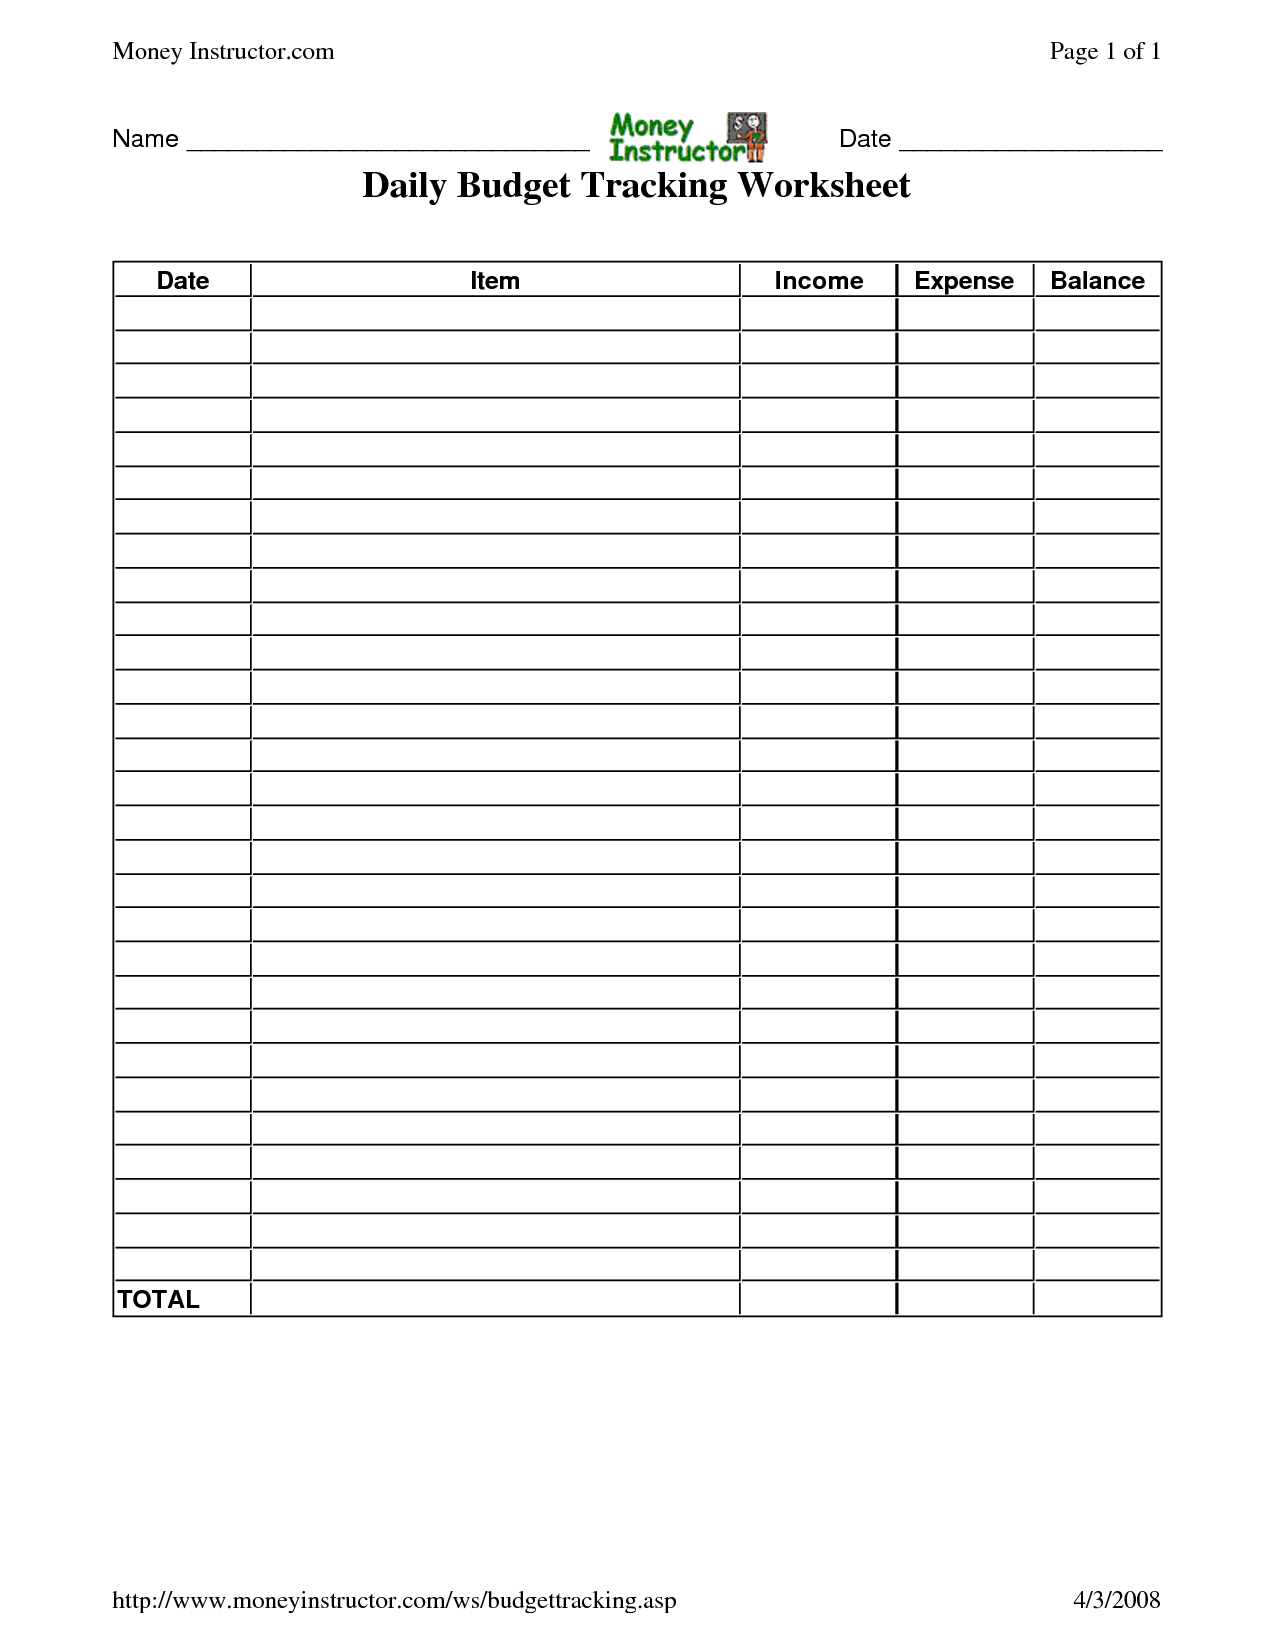 Daily Budget Tracking Worksheet Image